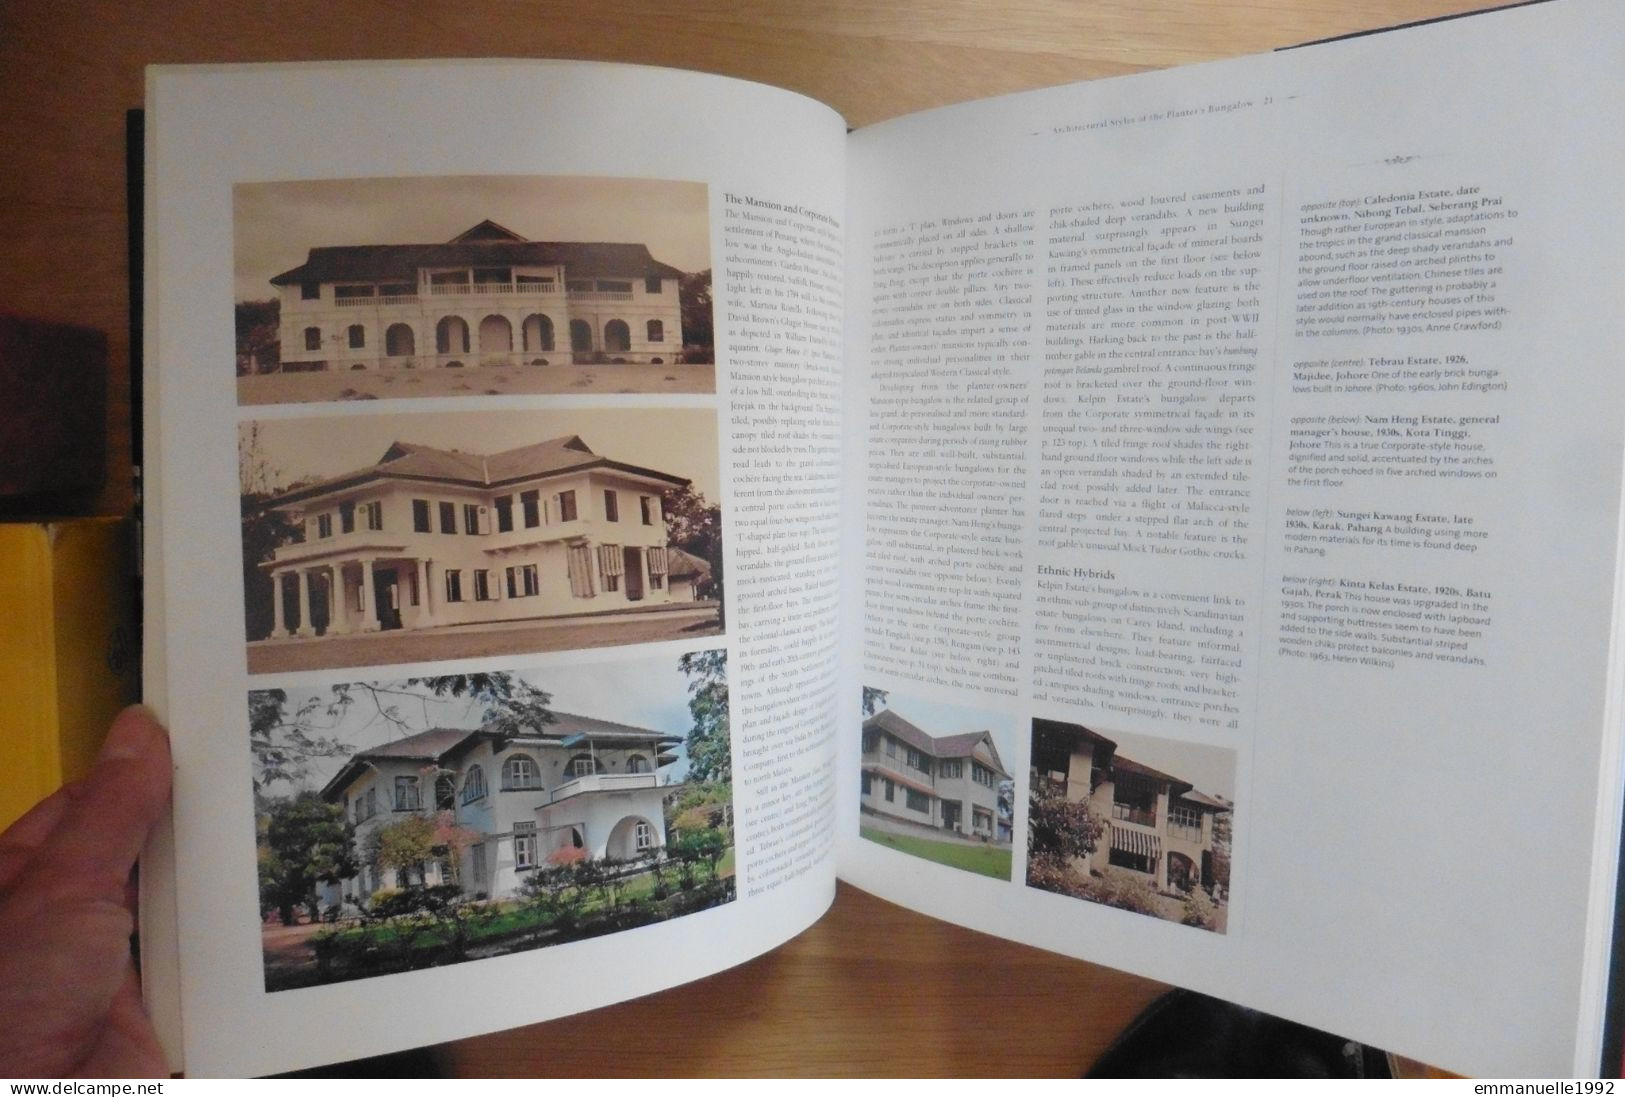 Book Livre The Planter's Bungalow A journey down the Malay Peninsula 2007 Jenkins Didier Millet Singapore